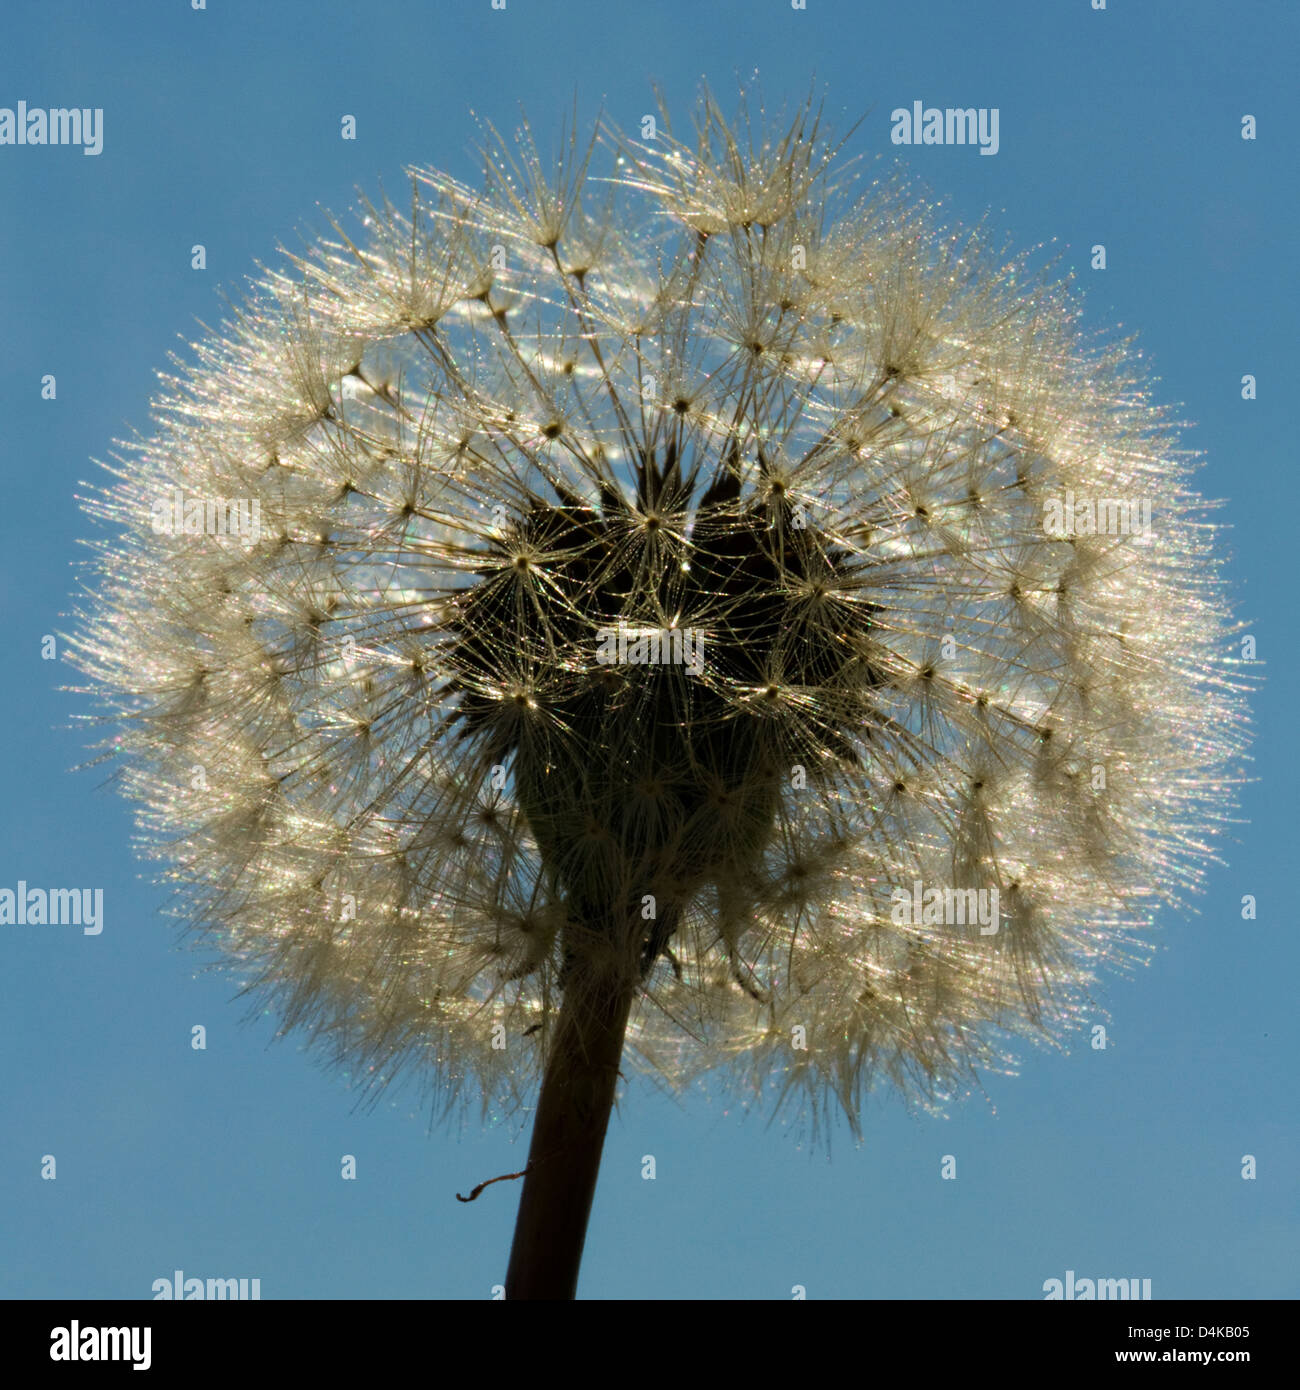 Dandelion seeds - Taraxacum erythrospermum, photographed facing up with a blue sky background Stock Photo